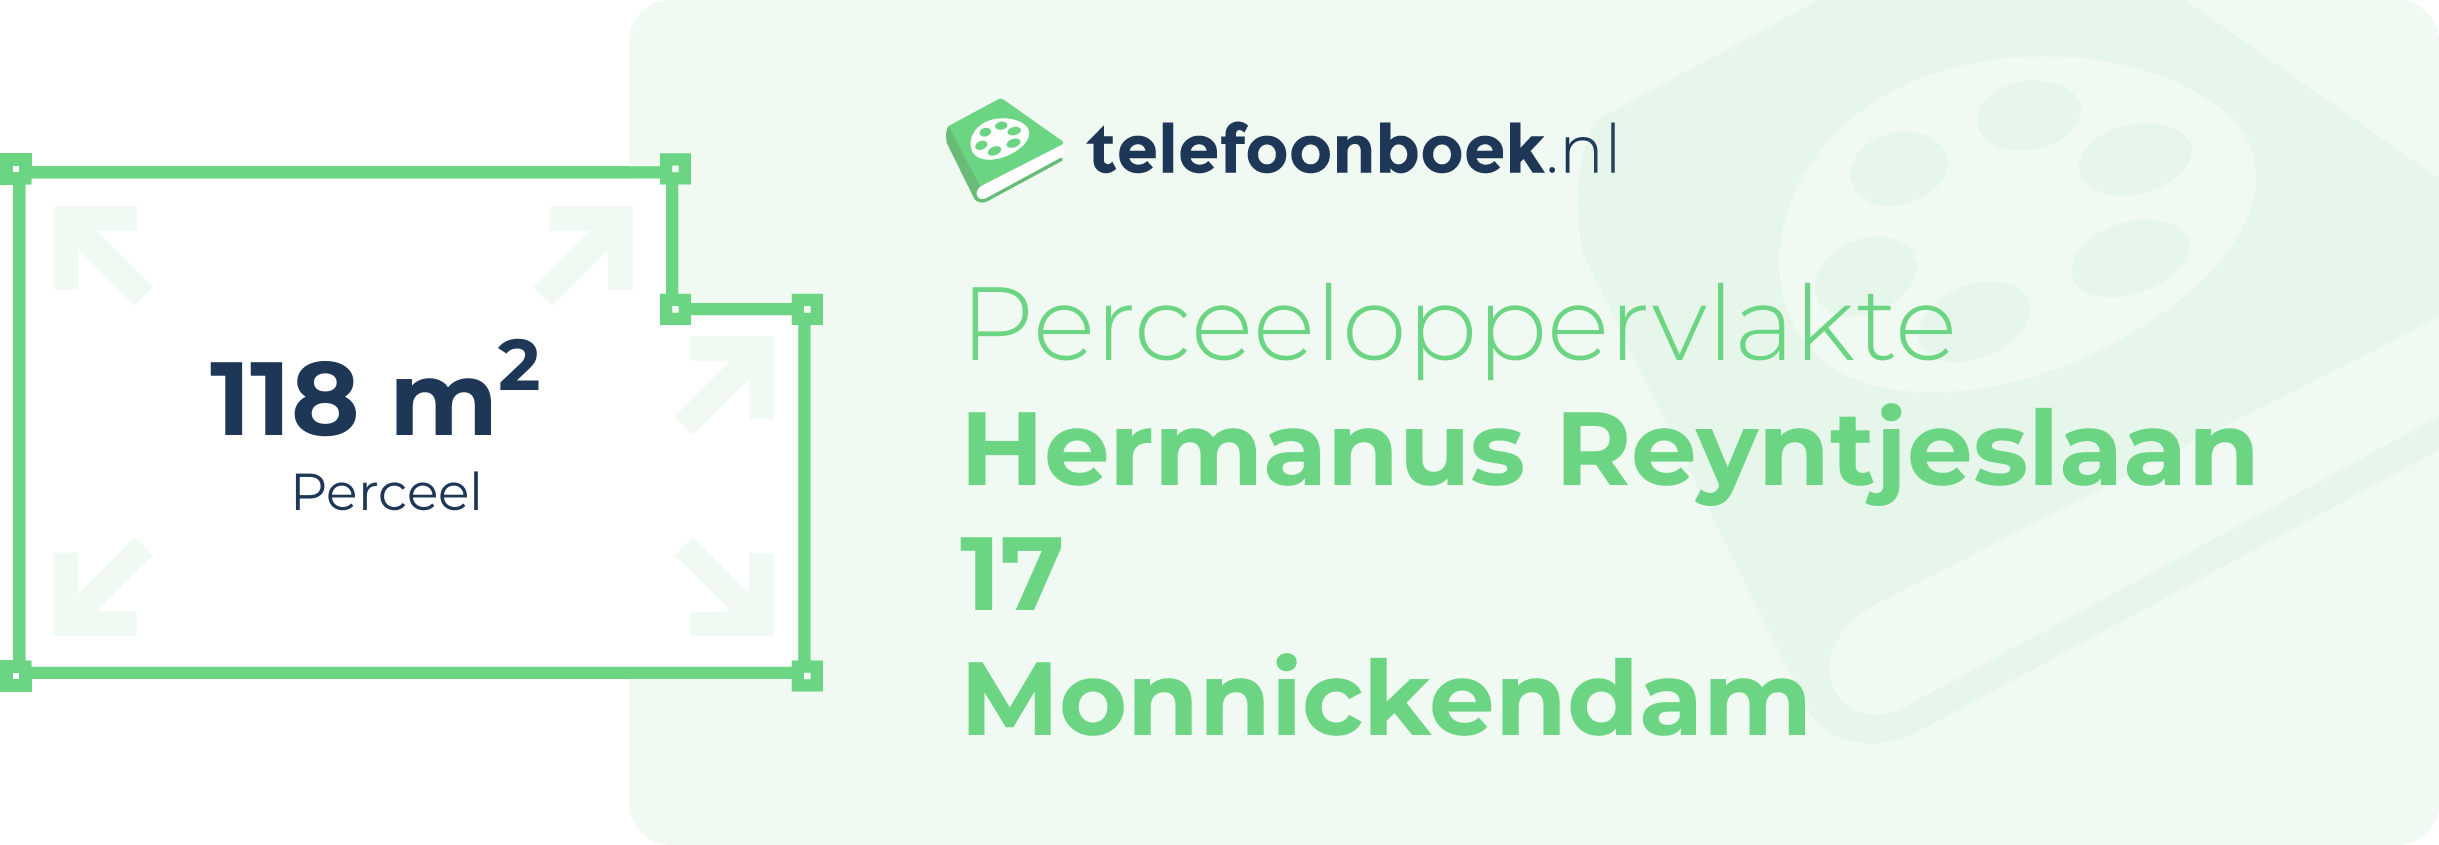 Perceeloppervlakte Hermanus Reyntjeslaan 17 Monnickendam